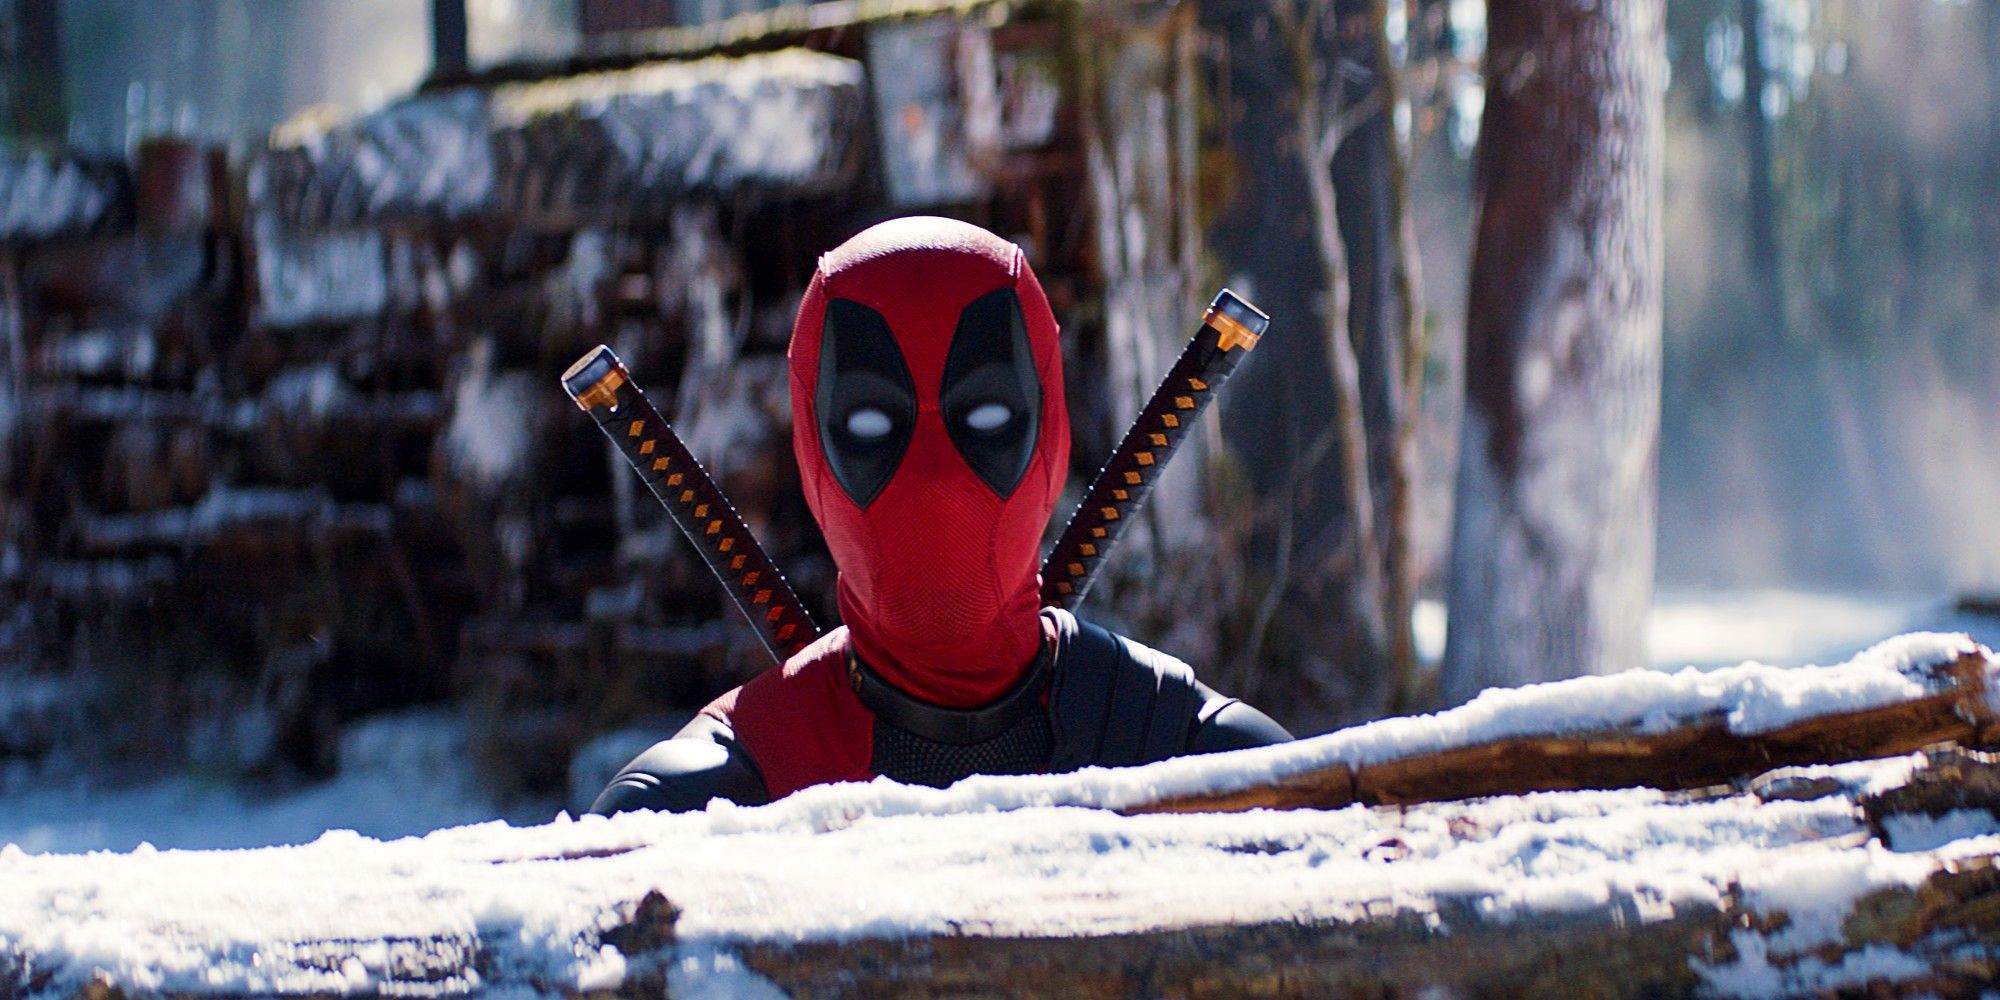 Ryan Reynolds In Deadpool Costume Poking His Head Up From Behind A Snowy Log In Deadpool & Wolverine